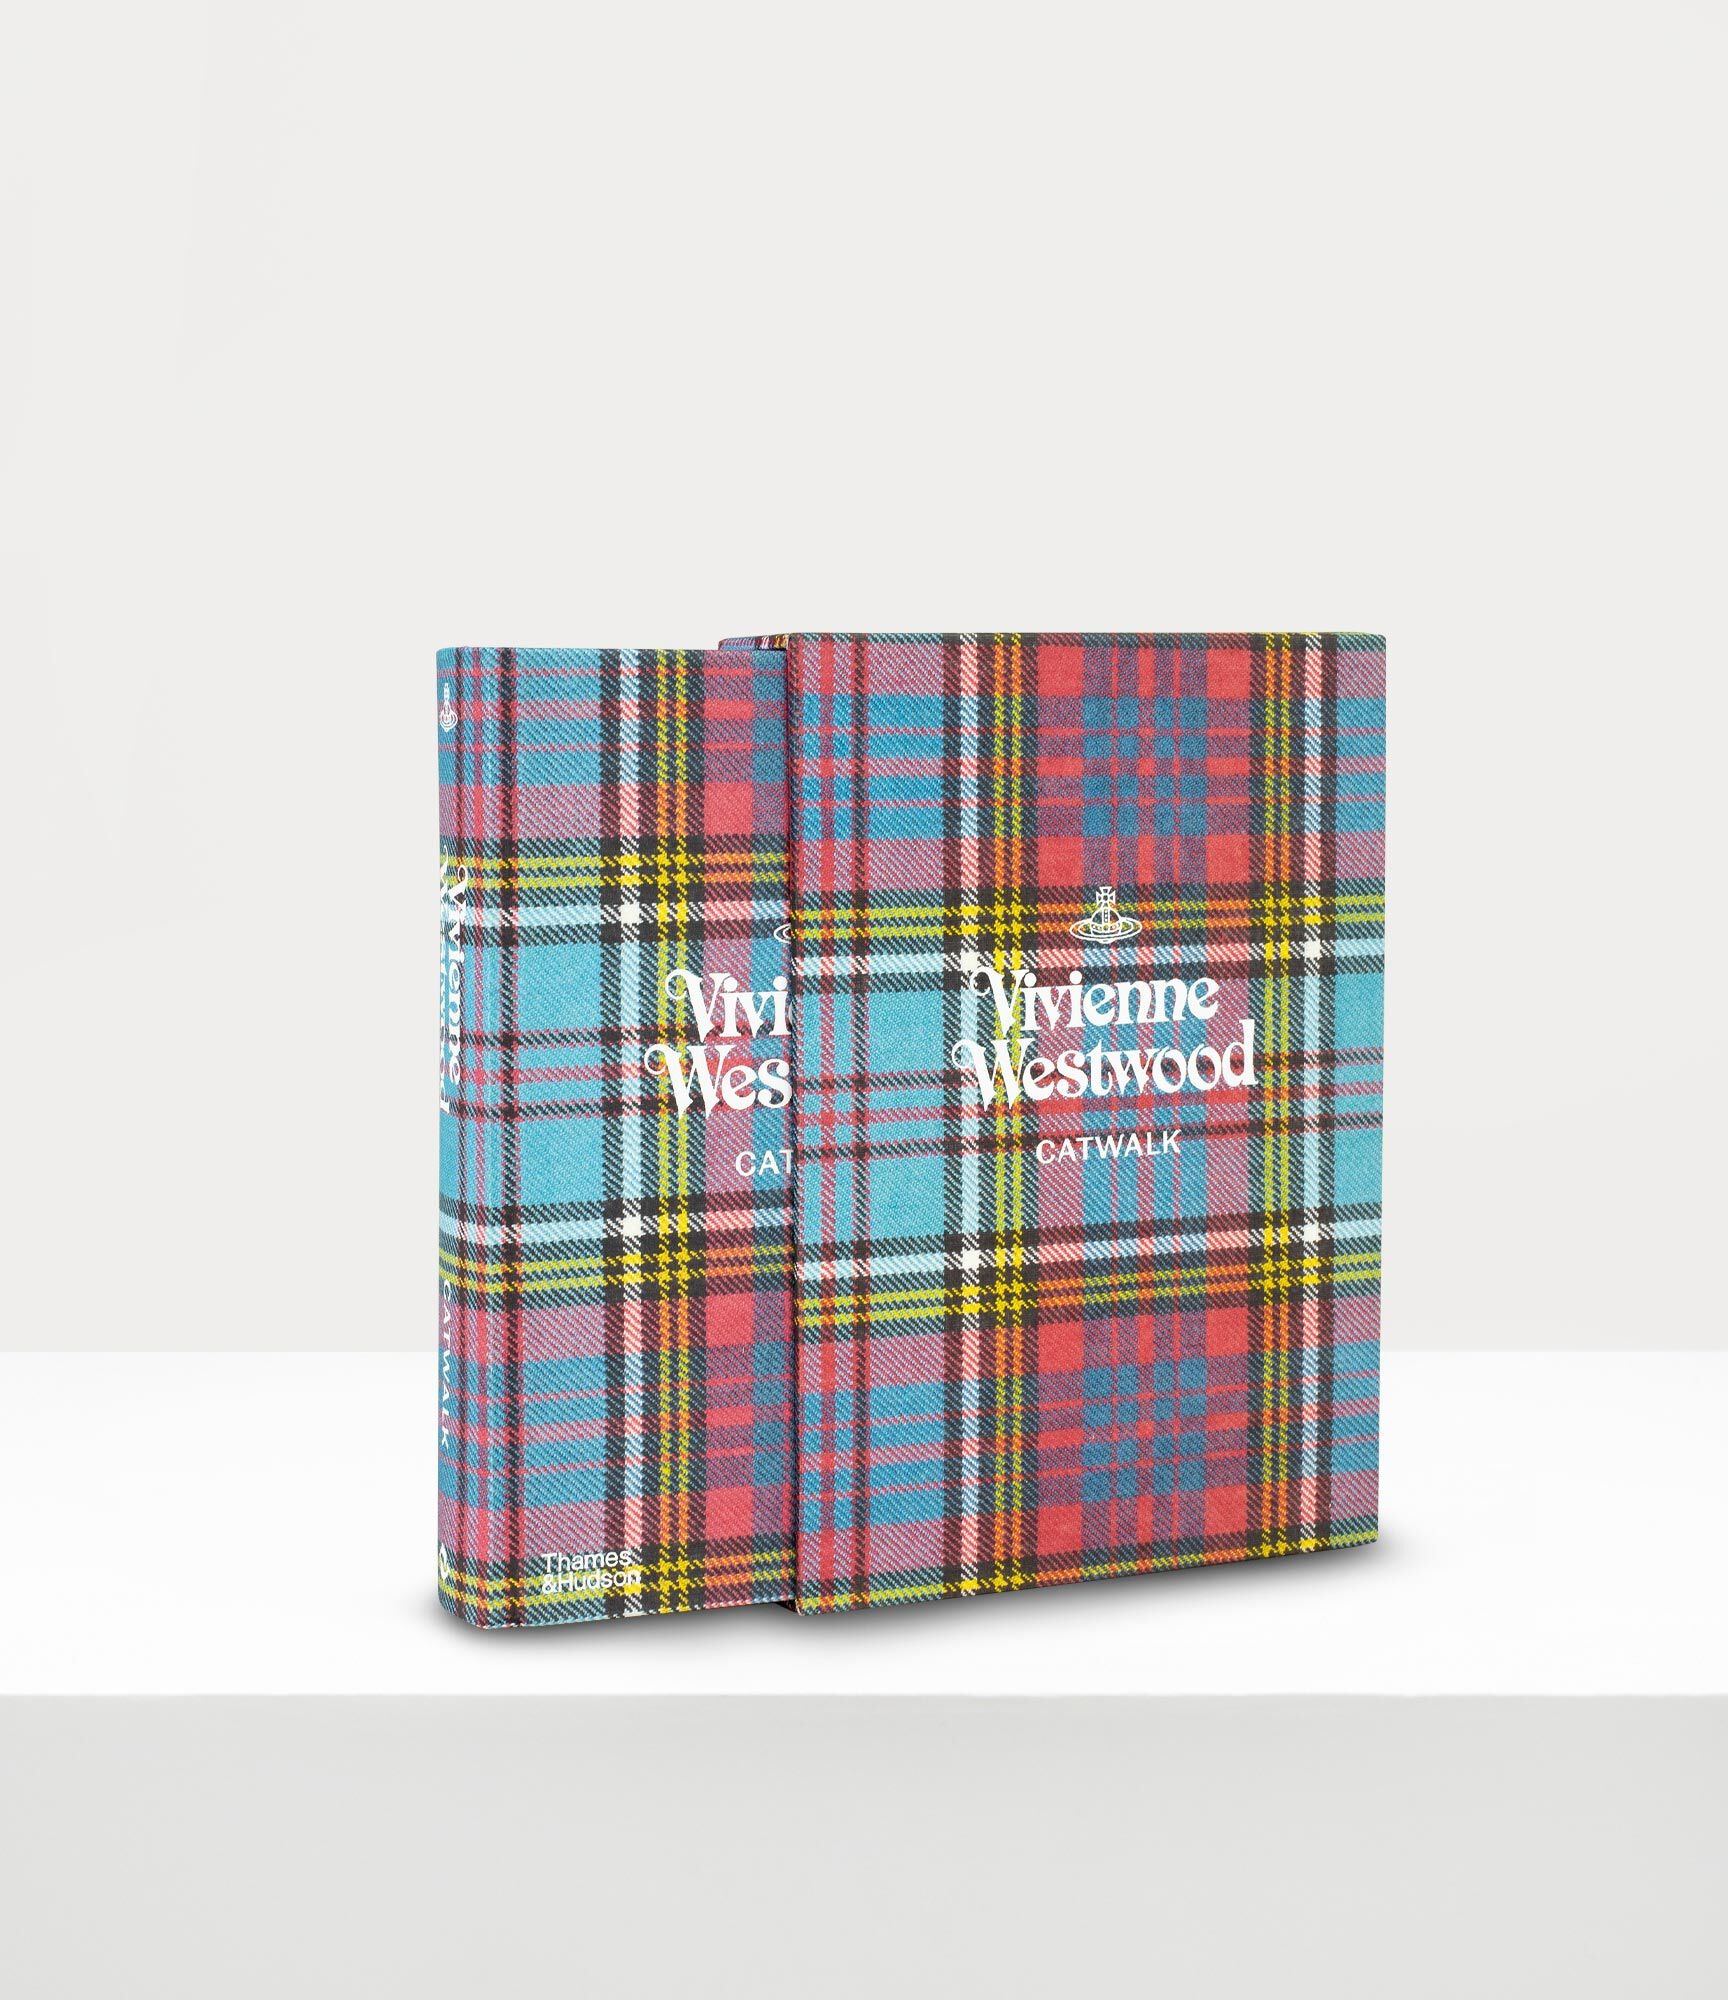 Vivienne Westwood LIMITED EDITION VIVIENNE WESTWOOD CATWALK: THE